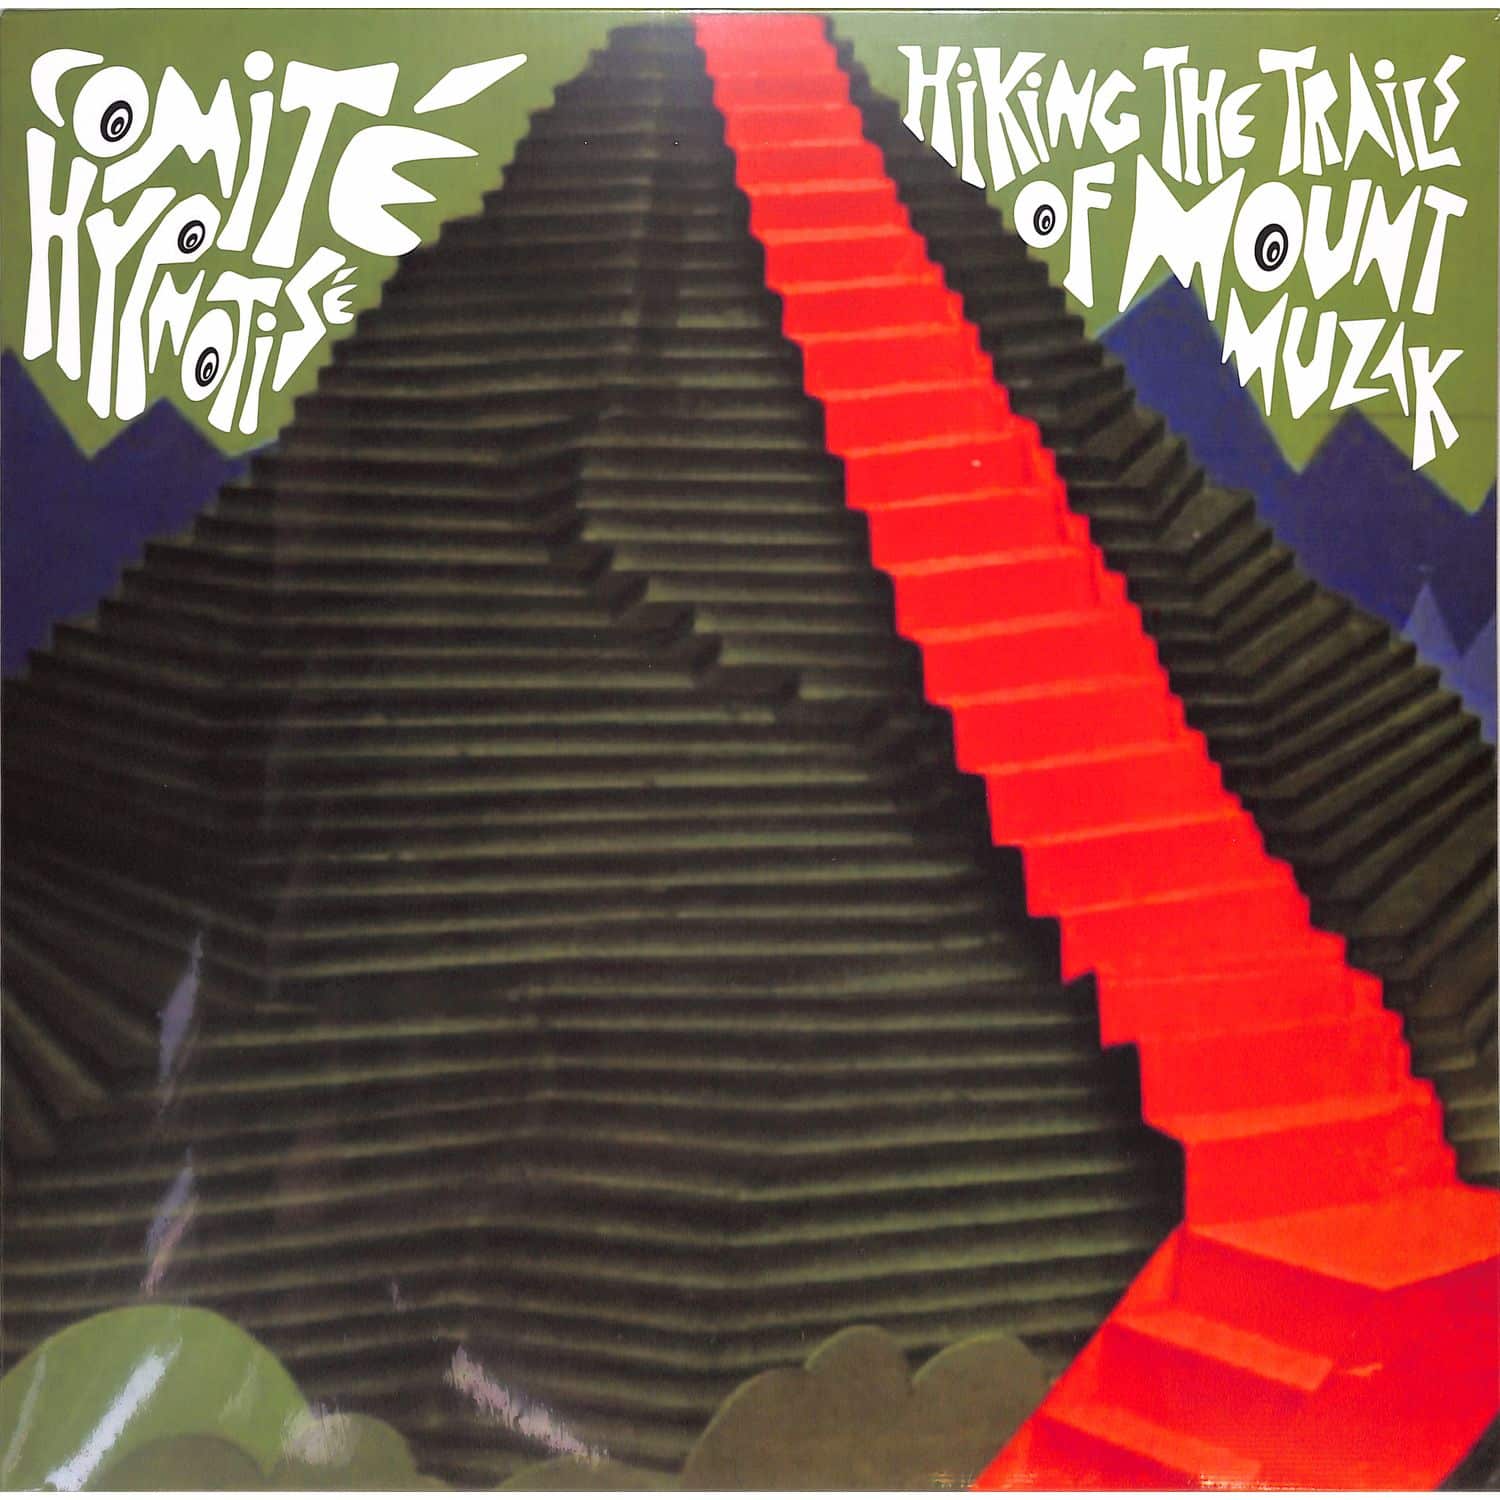 Comite Hypnotise - HIKING THE TRAILS OF MOUNT MUZAK 